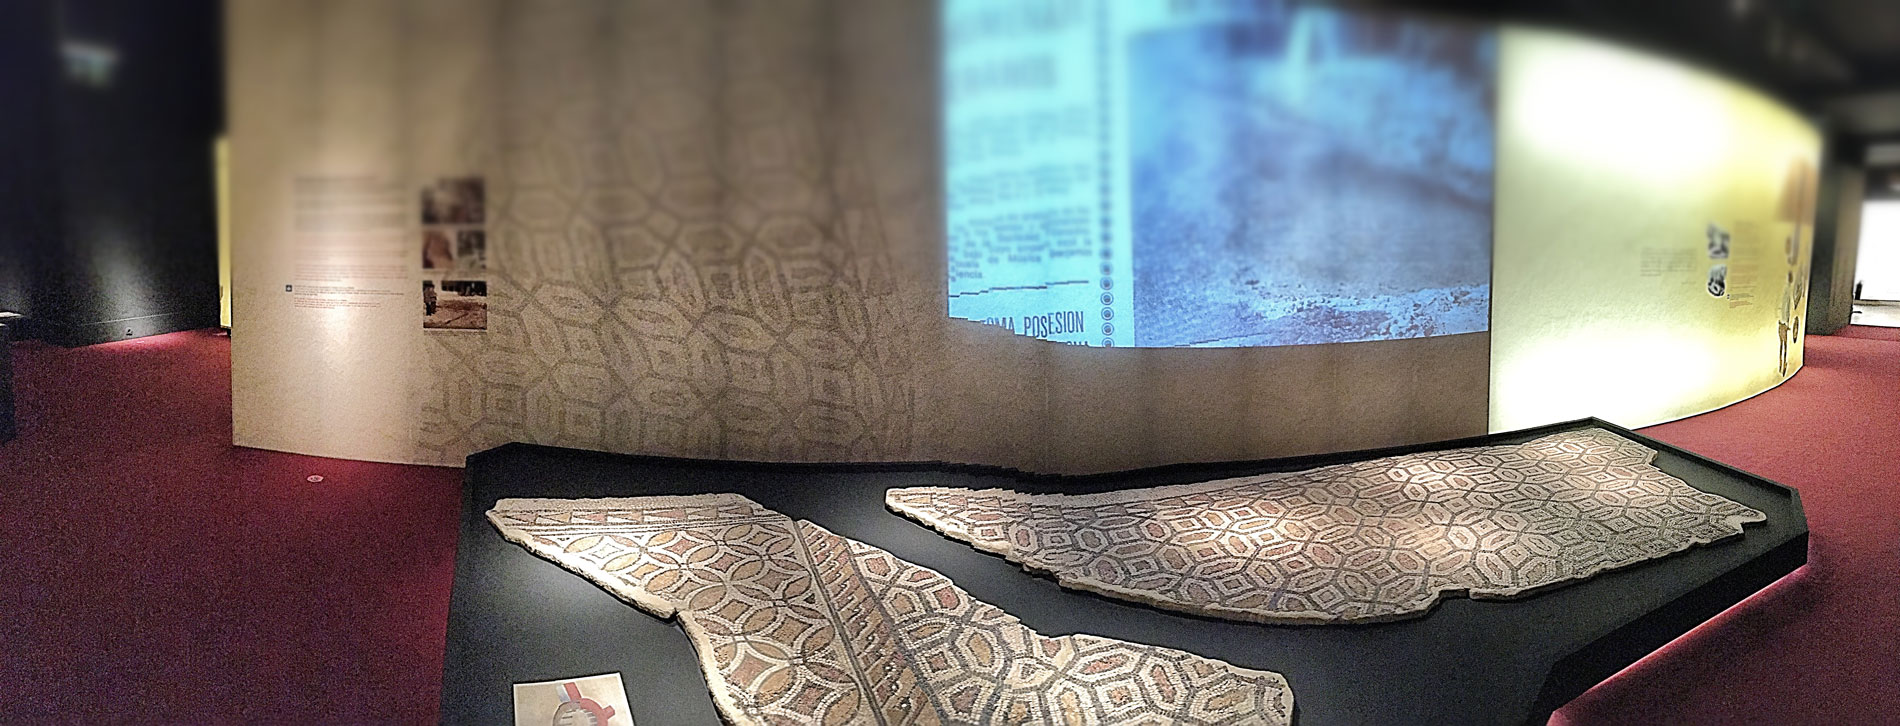 Sala 1 Mosaico romano de Viilla Petraria